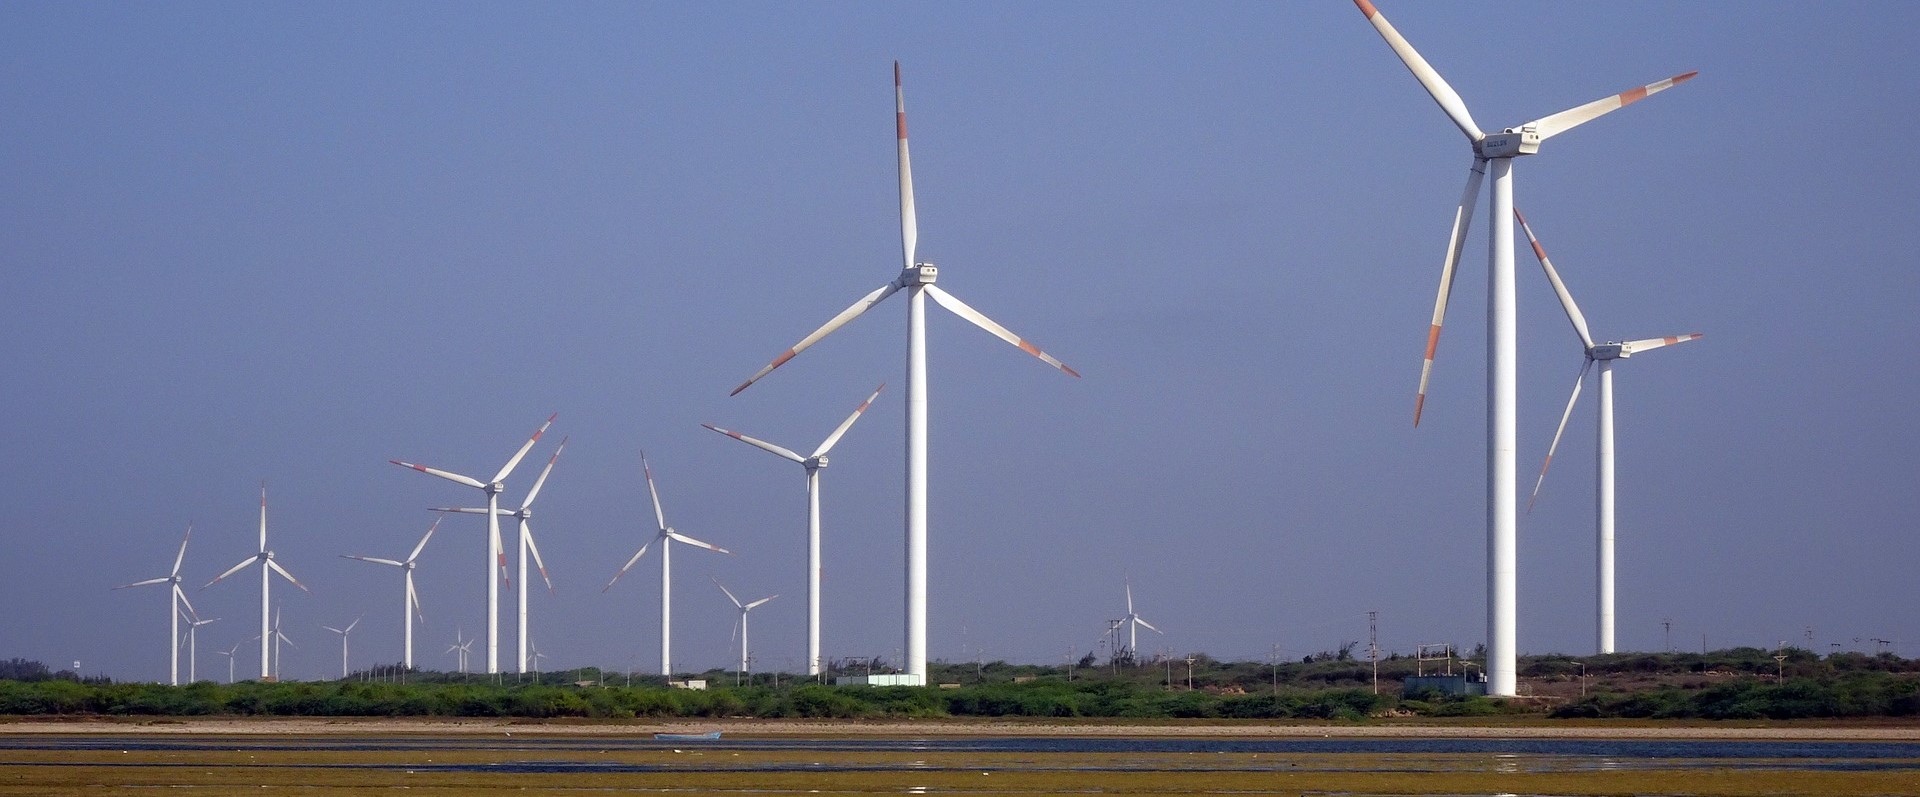 In recent years, India has ramped up its wind power generation capacity / Credit: Bishnu Sarangi via Pixabay. 